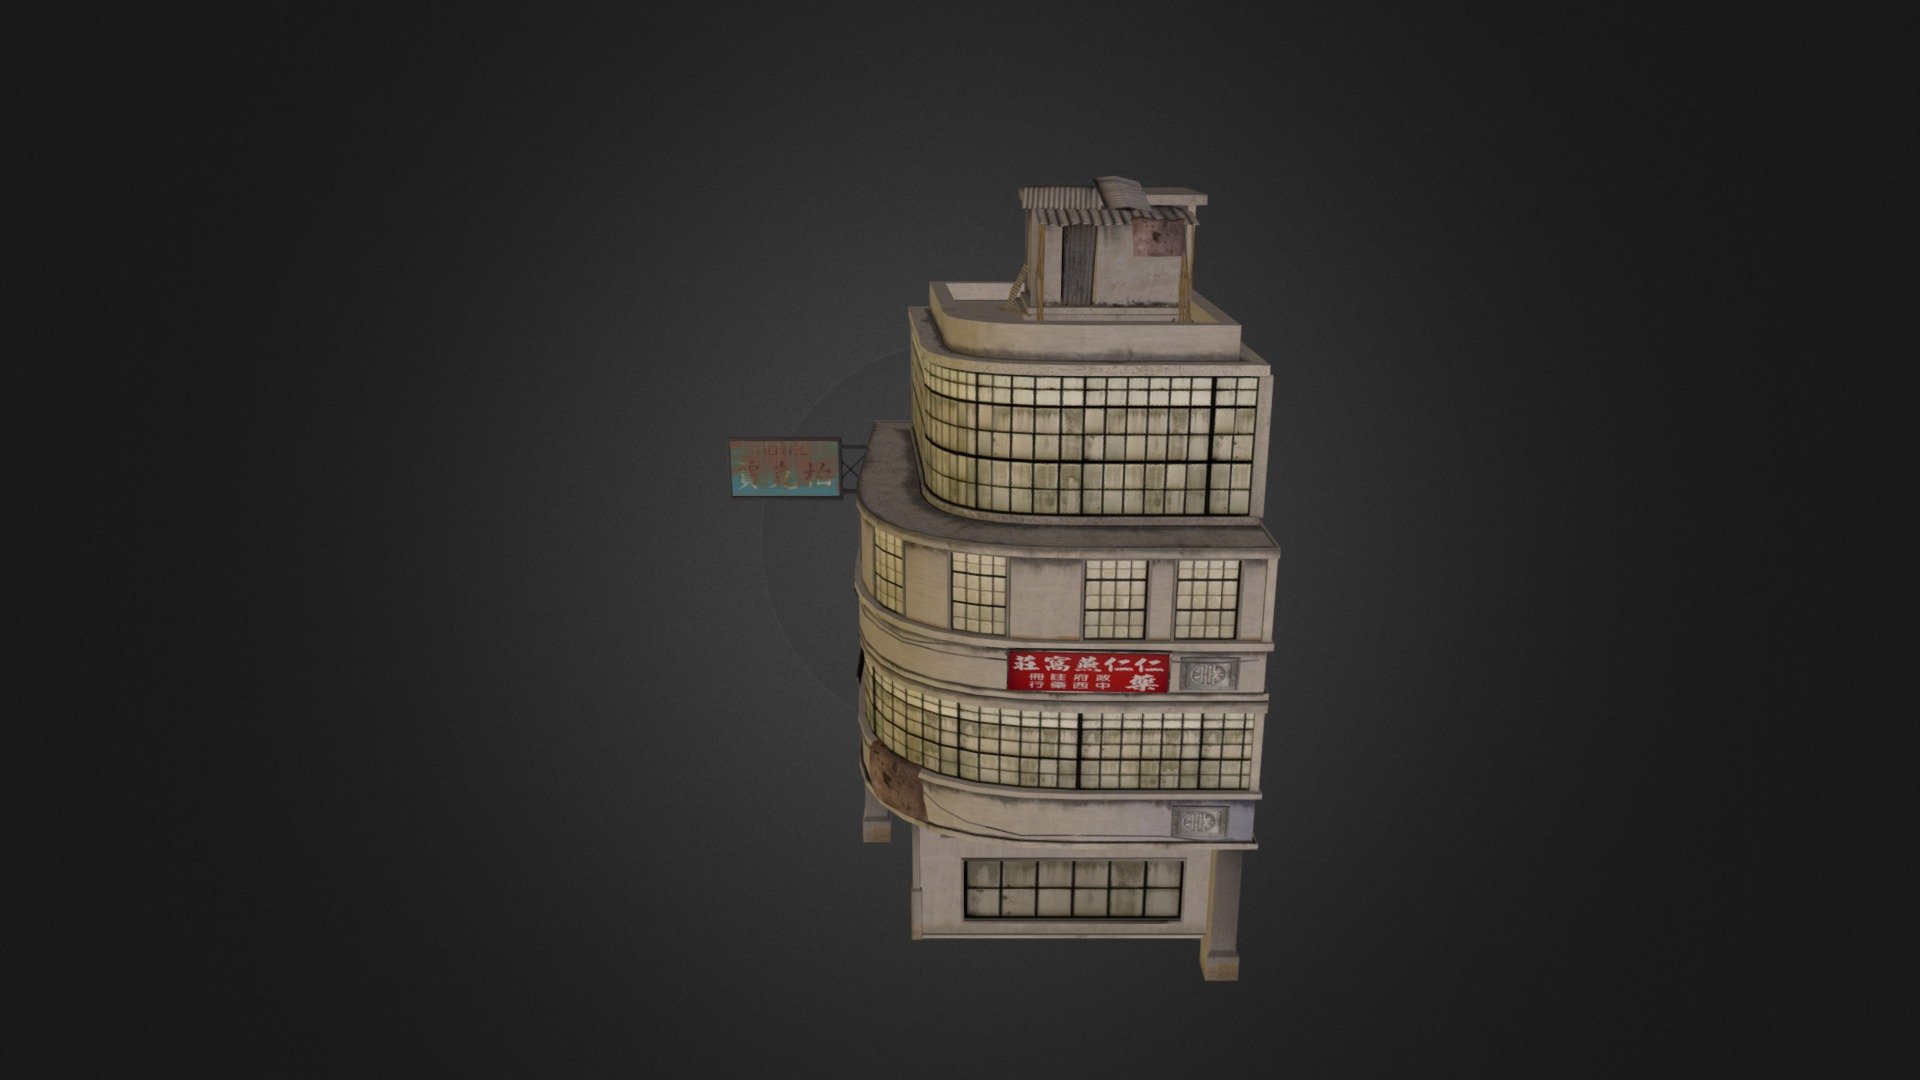 Hong Kong Hotel - 3D1 Exam Assignment [Low Poly] - Hong Kong Hotel - 3D model by robinrodet 3d model